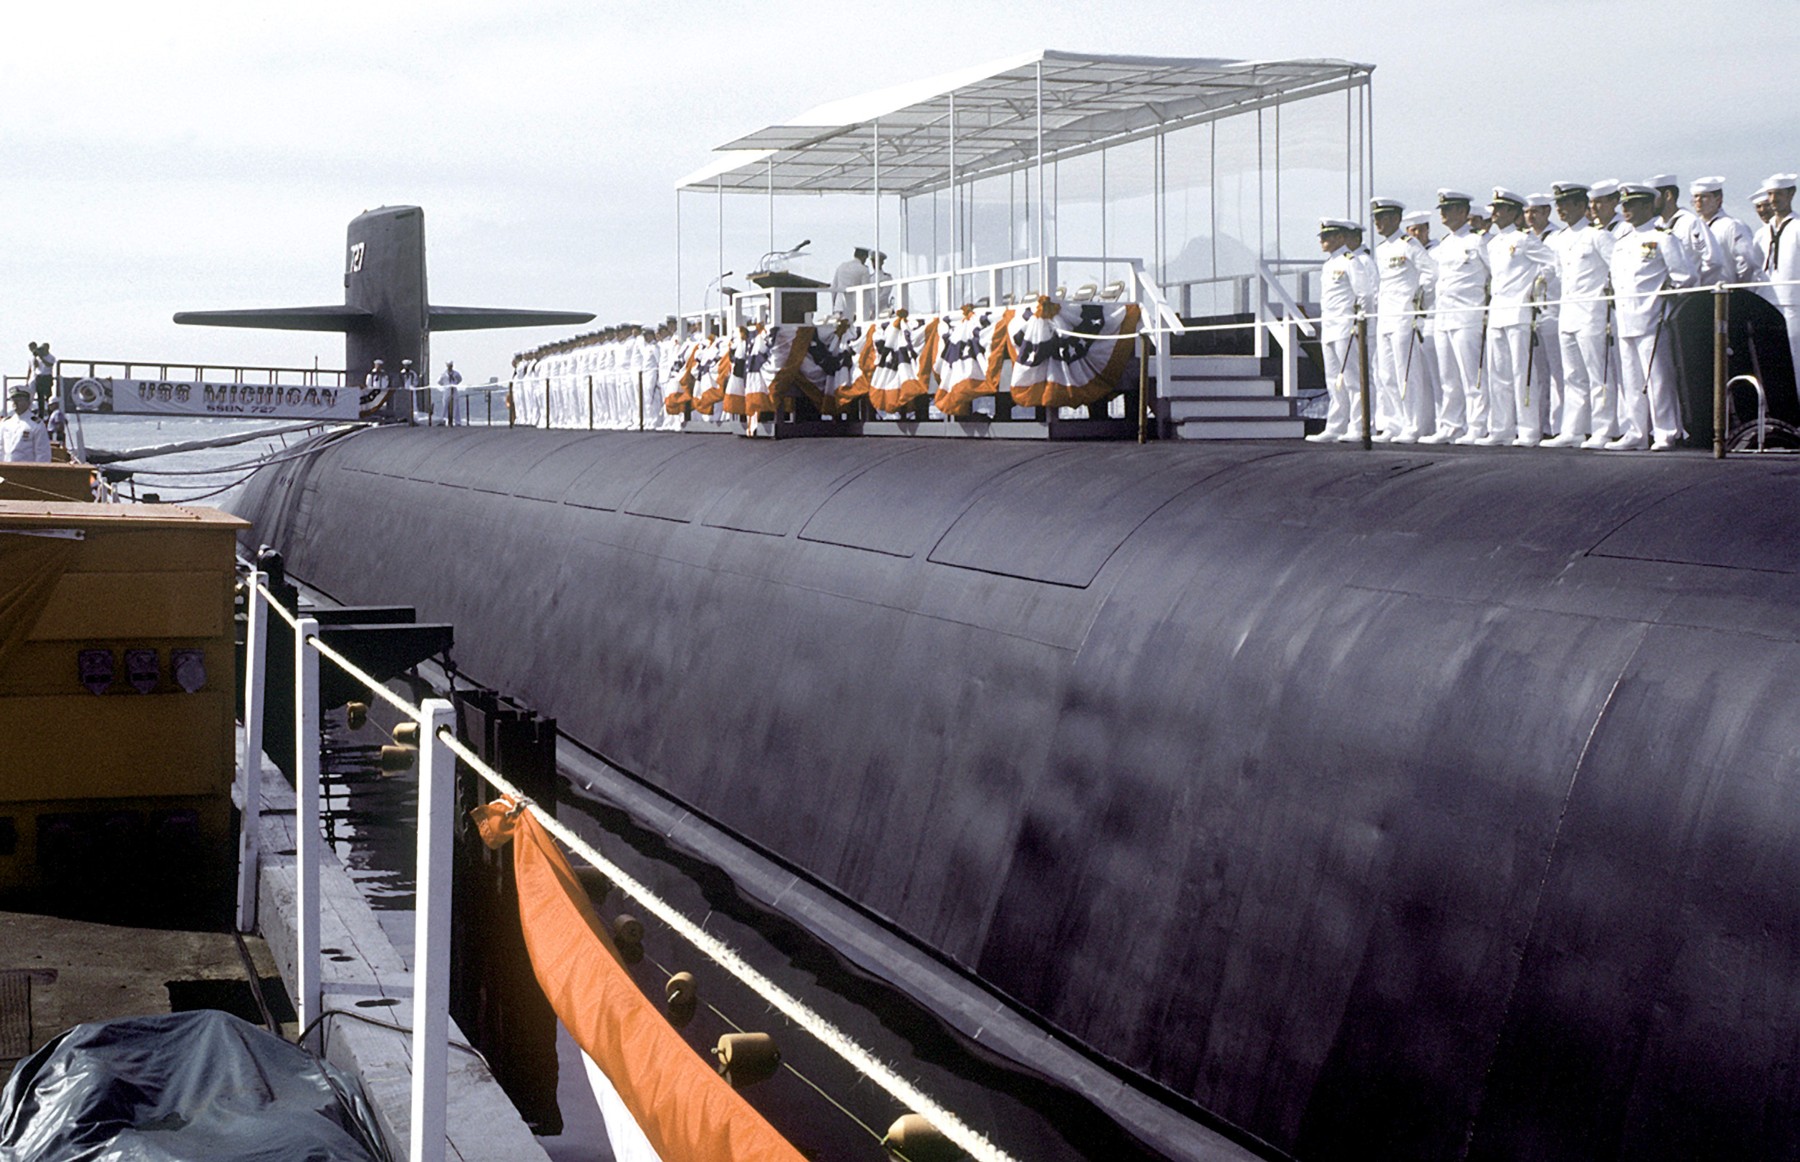 ssbn-727 uss michigan ohio class ballistic missile submarine 1982 44 commissioning ceremony